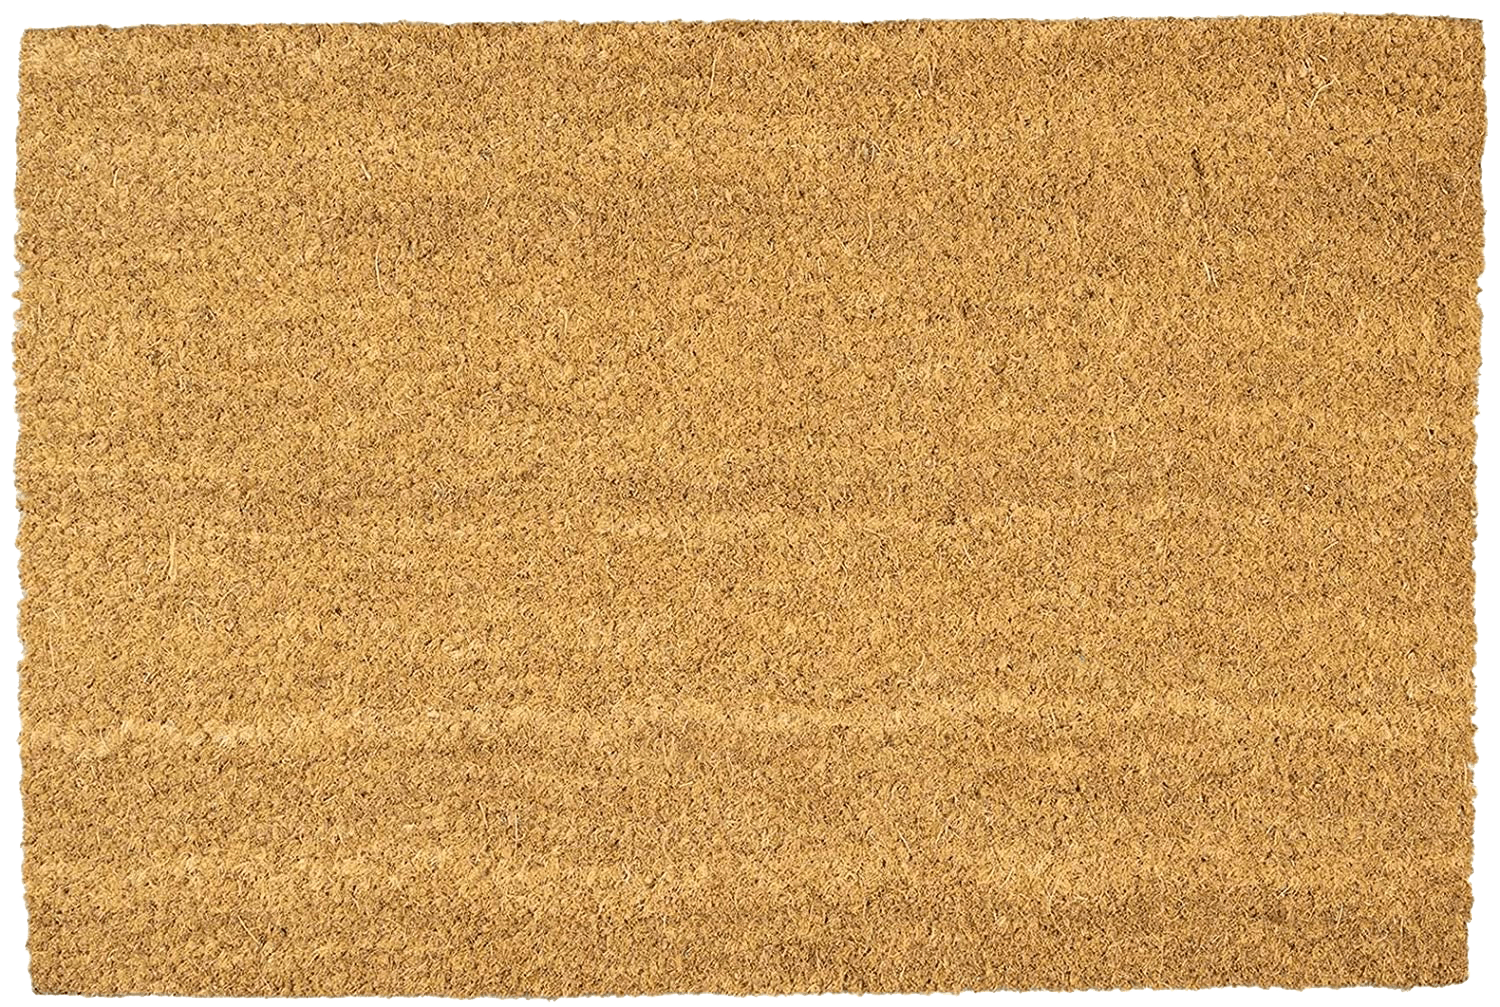 The Canvas Coir Doormat